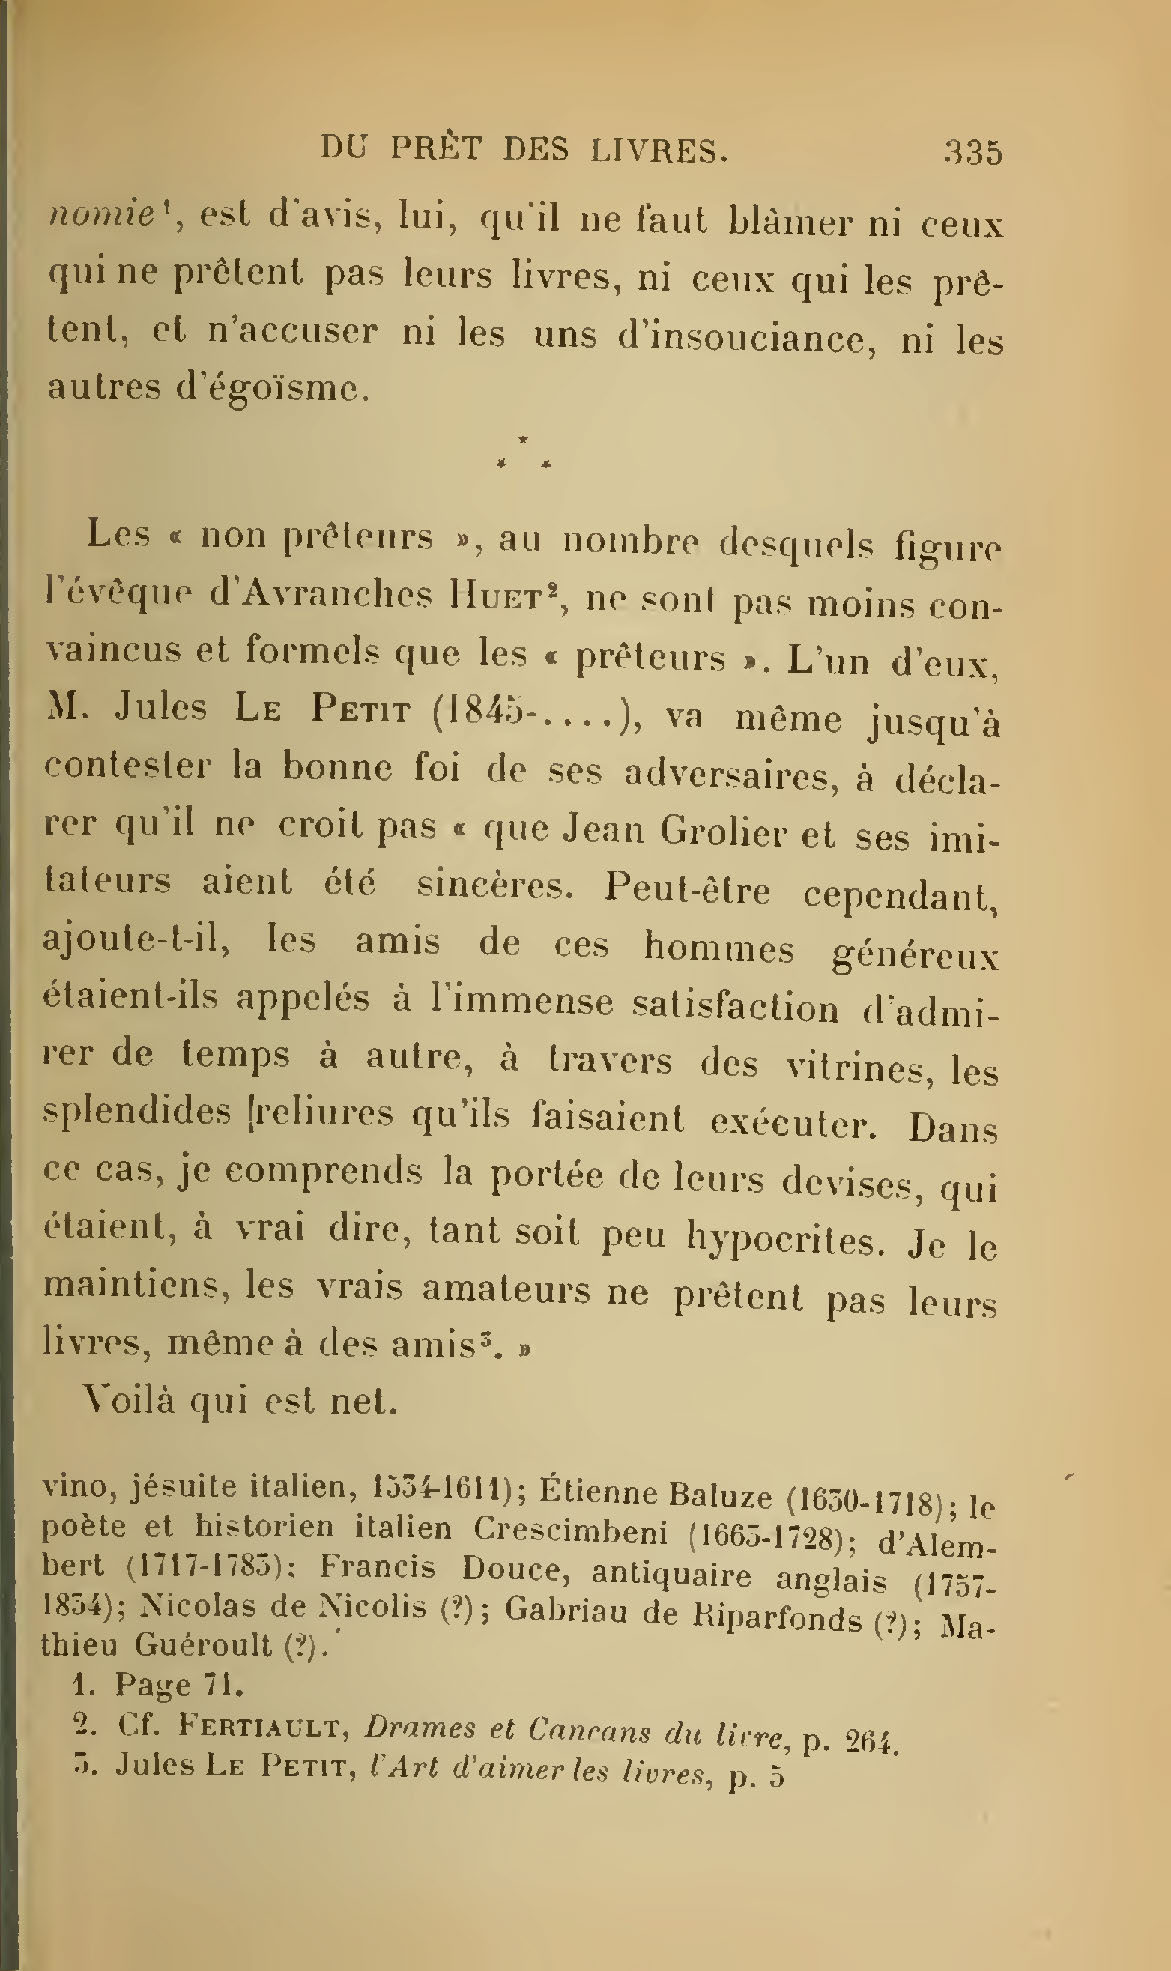 Albert Cim, Le Livre, t. II, p. 335.